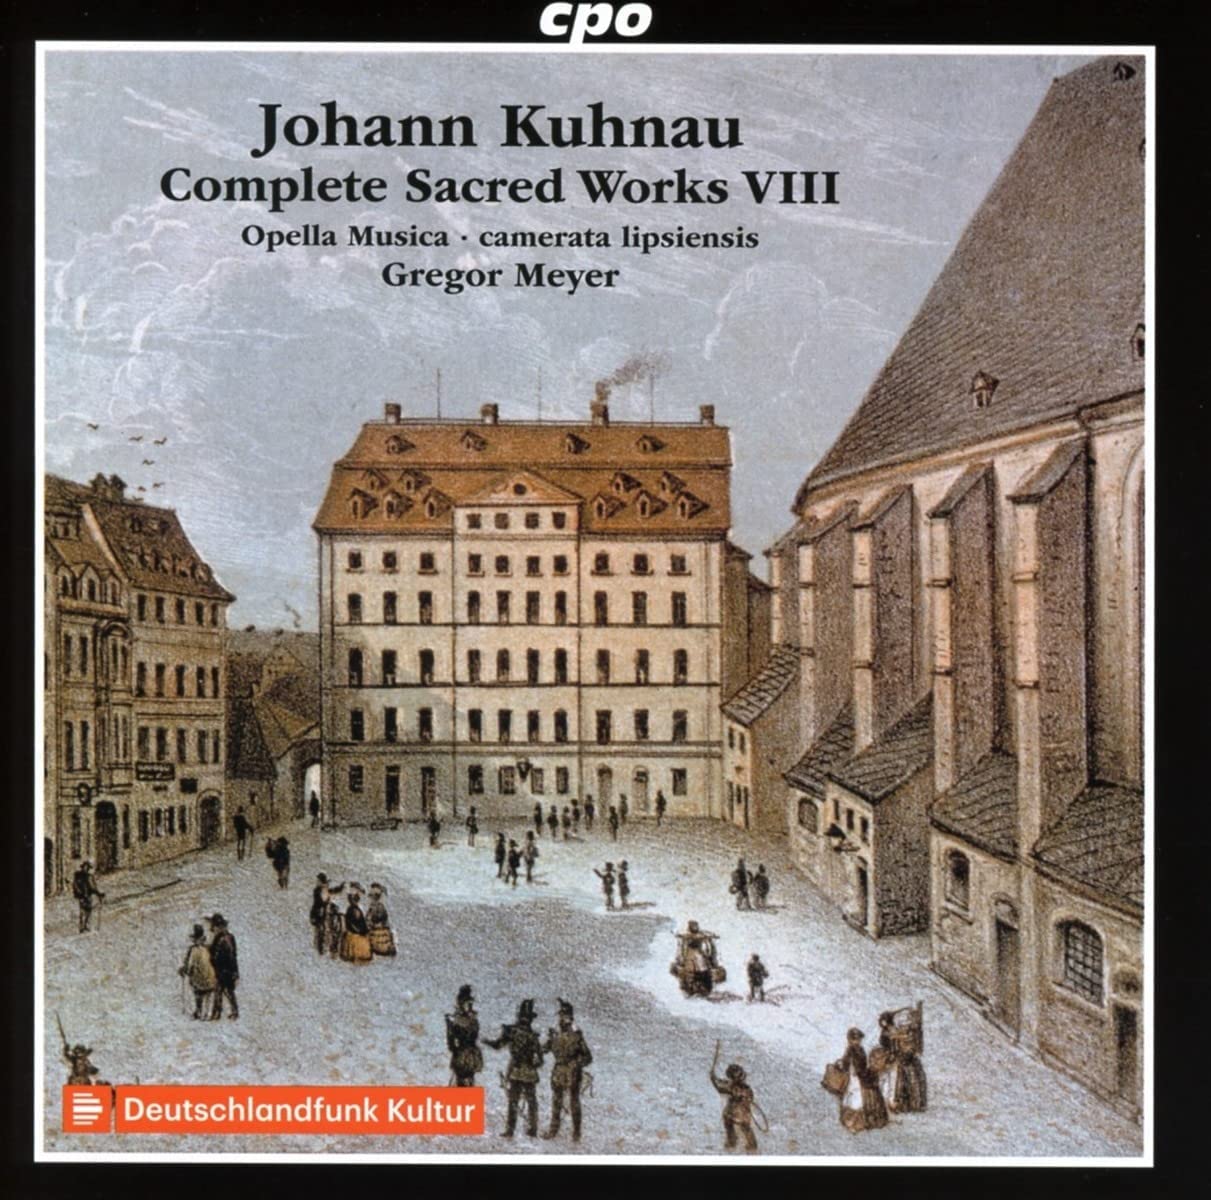 CD cover Kuhnau Complete Sacred Works VIII